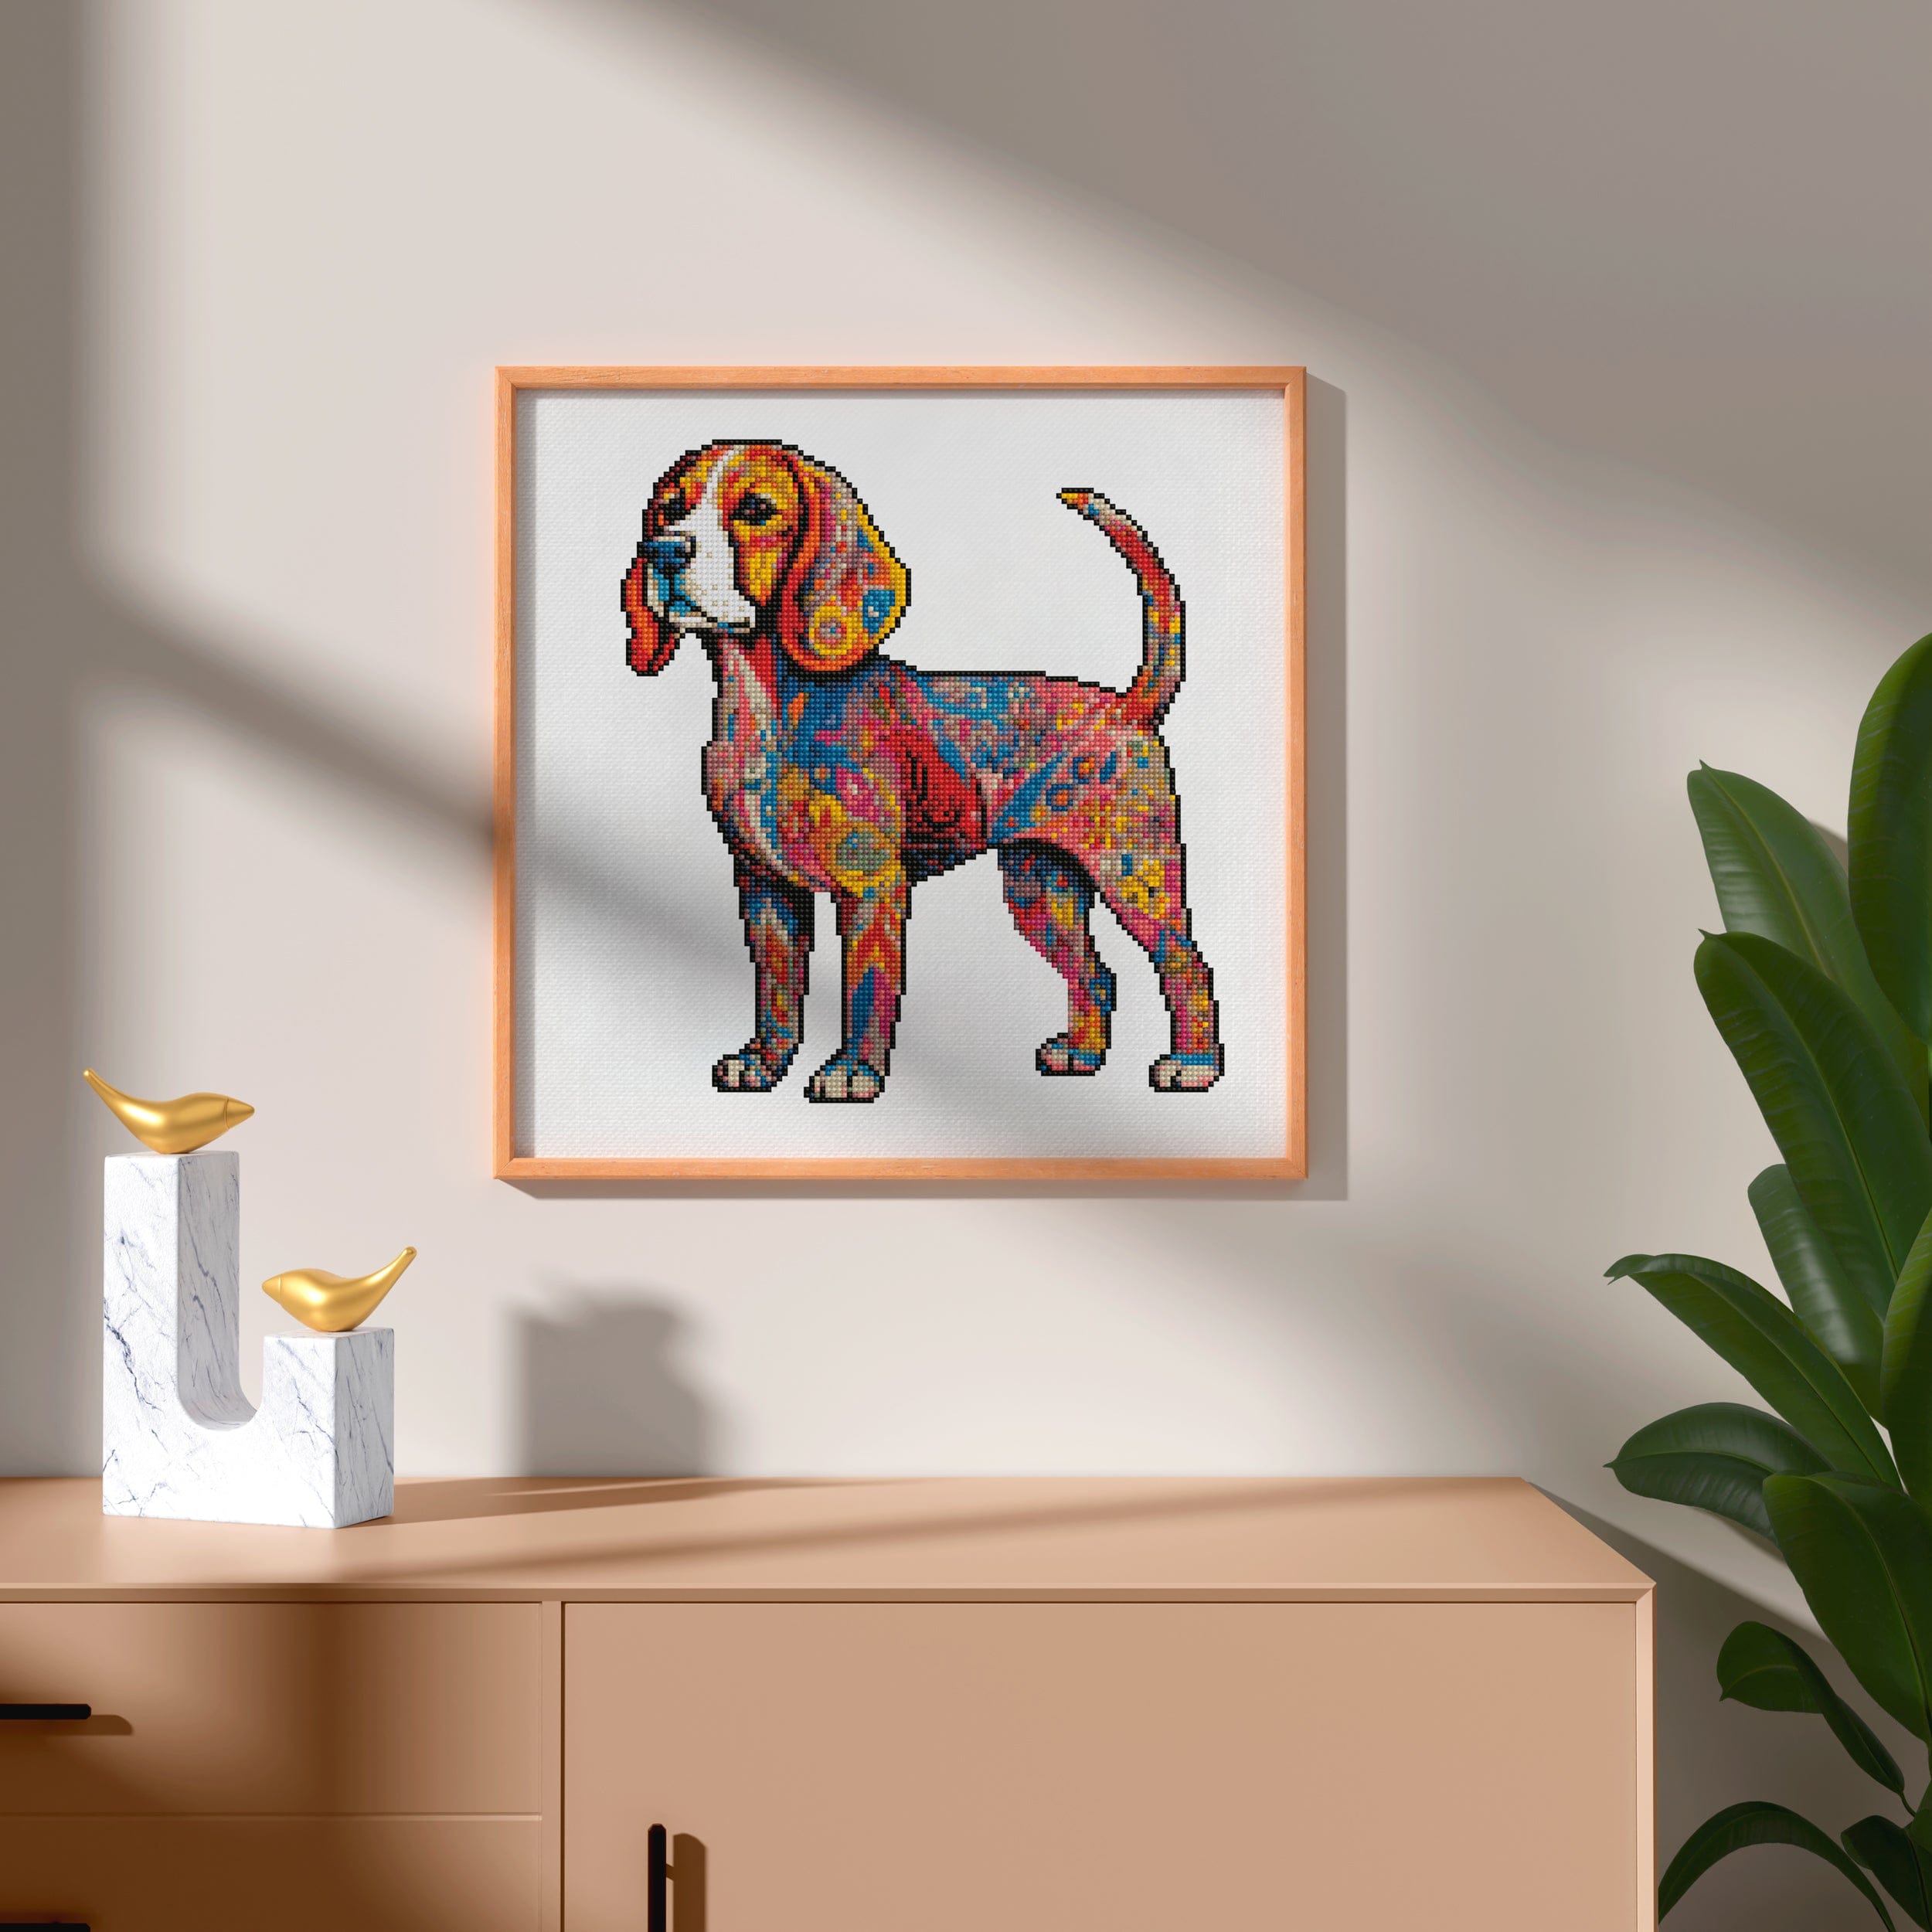 15.7"x15.7" / 40cm x 40cm Beagle Dog - Diamond Painting Kit